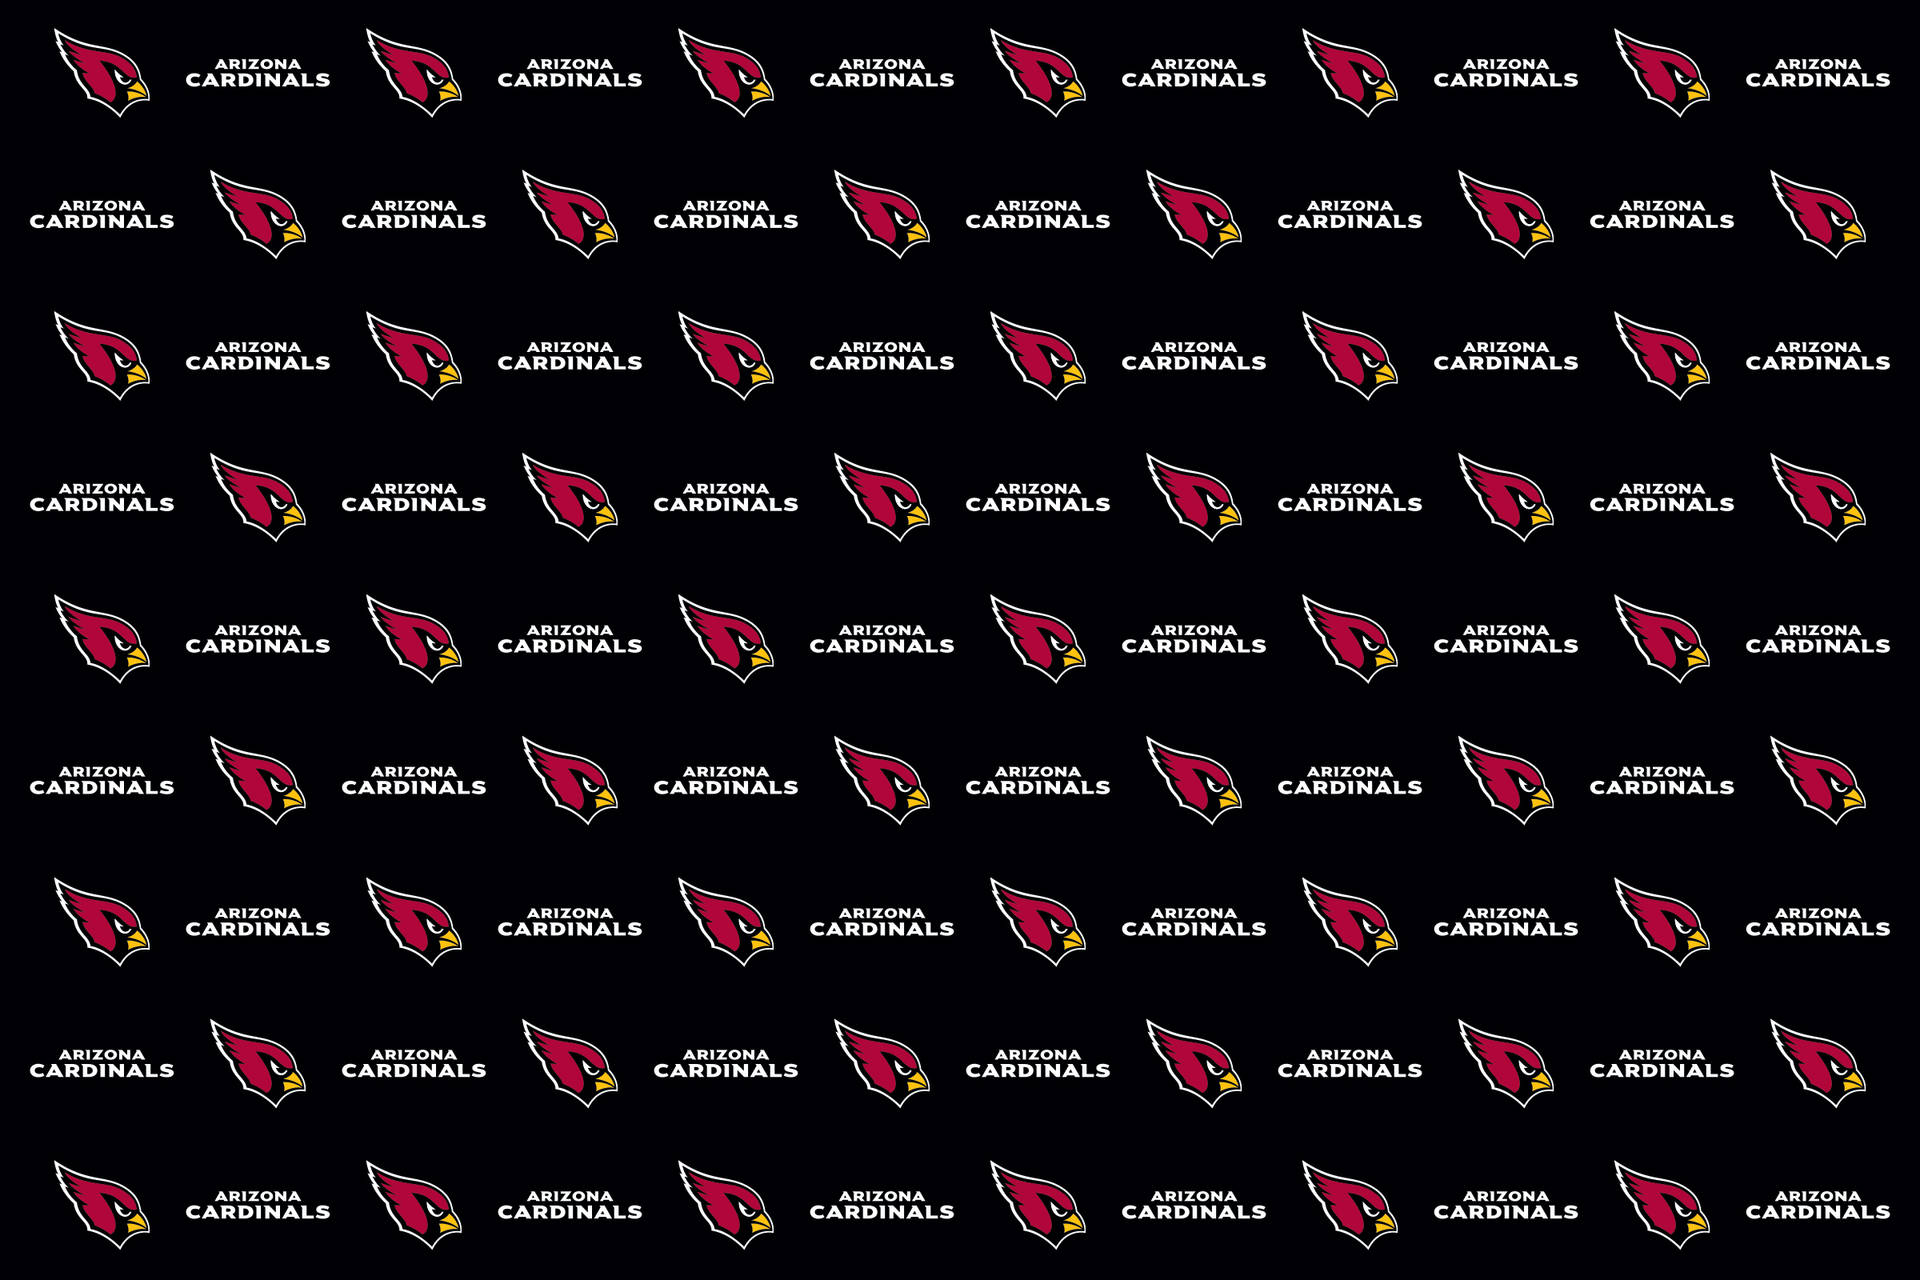 Arizona Cardinals 2400X1600 Wallpaper and Background Image